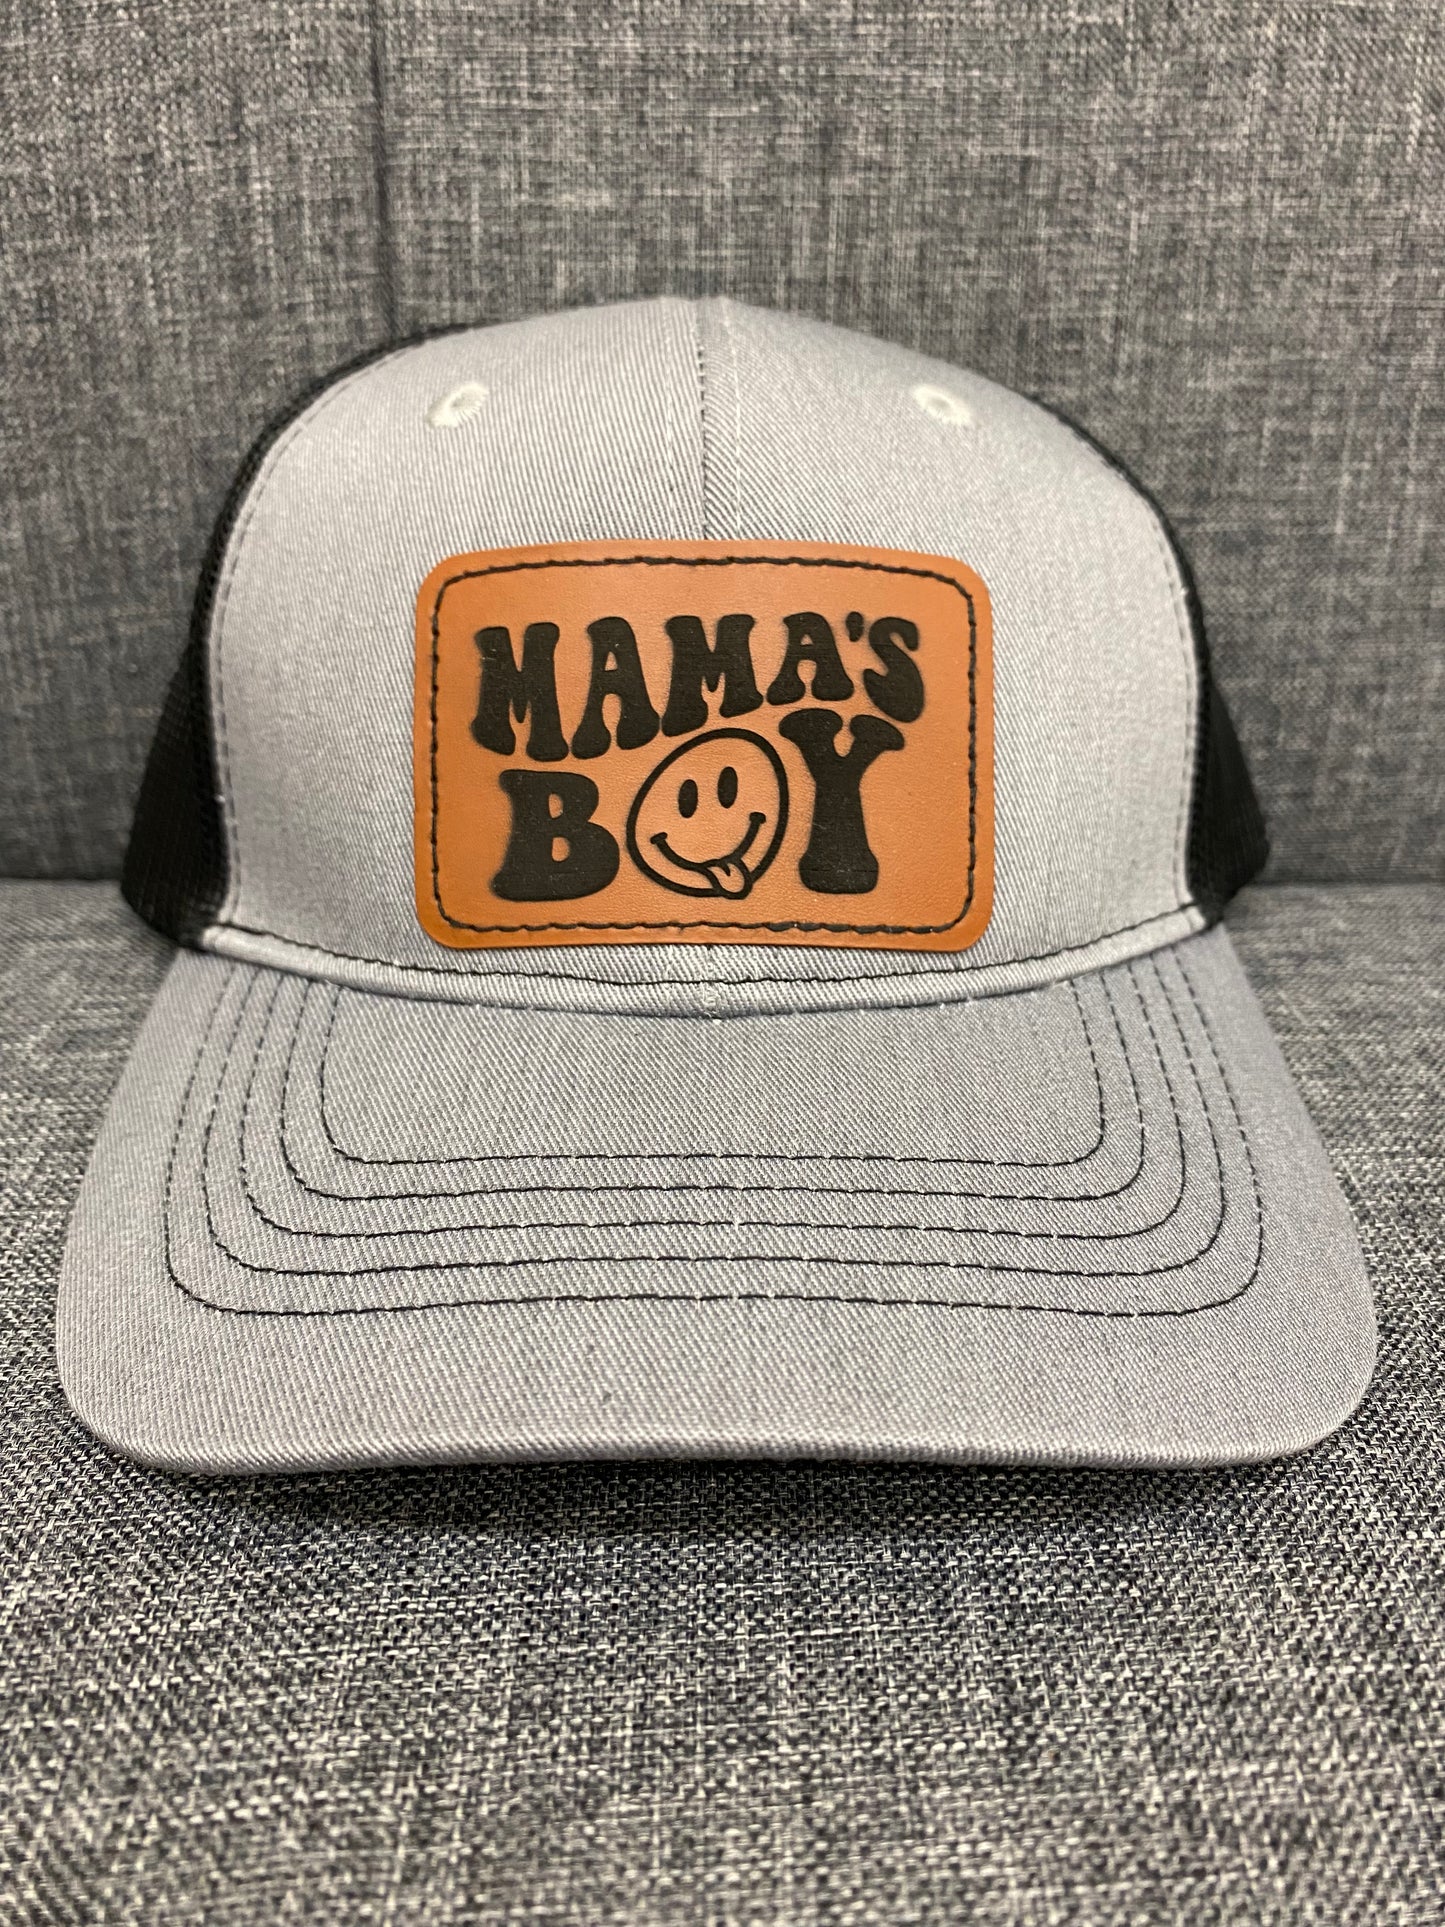 Mamas Boy hat